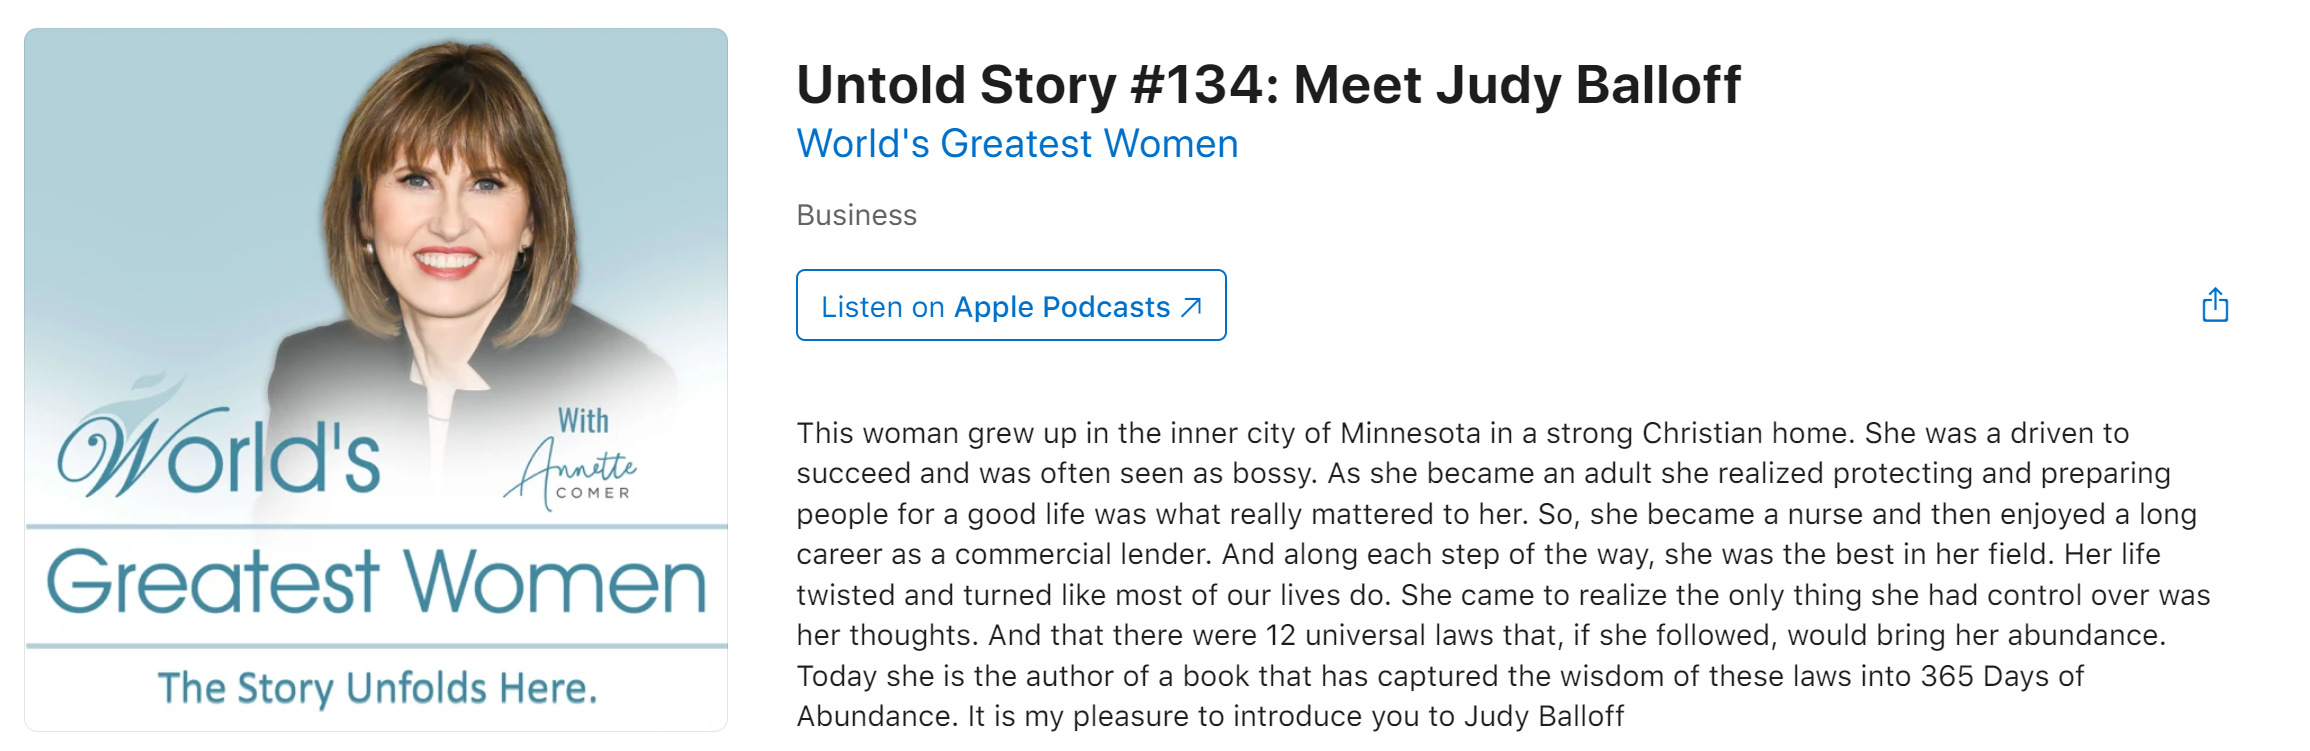 worlds greatest women podcast with judy balloff